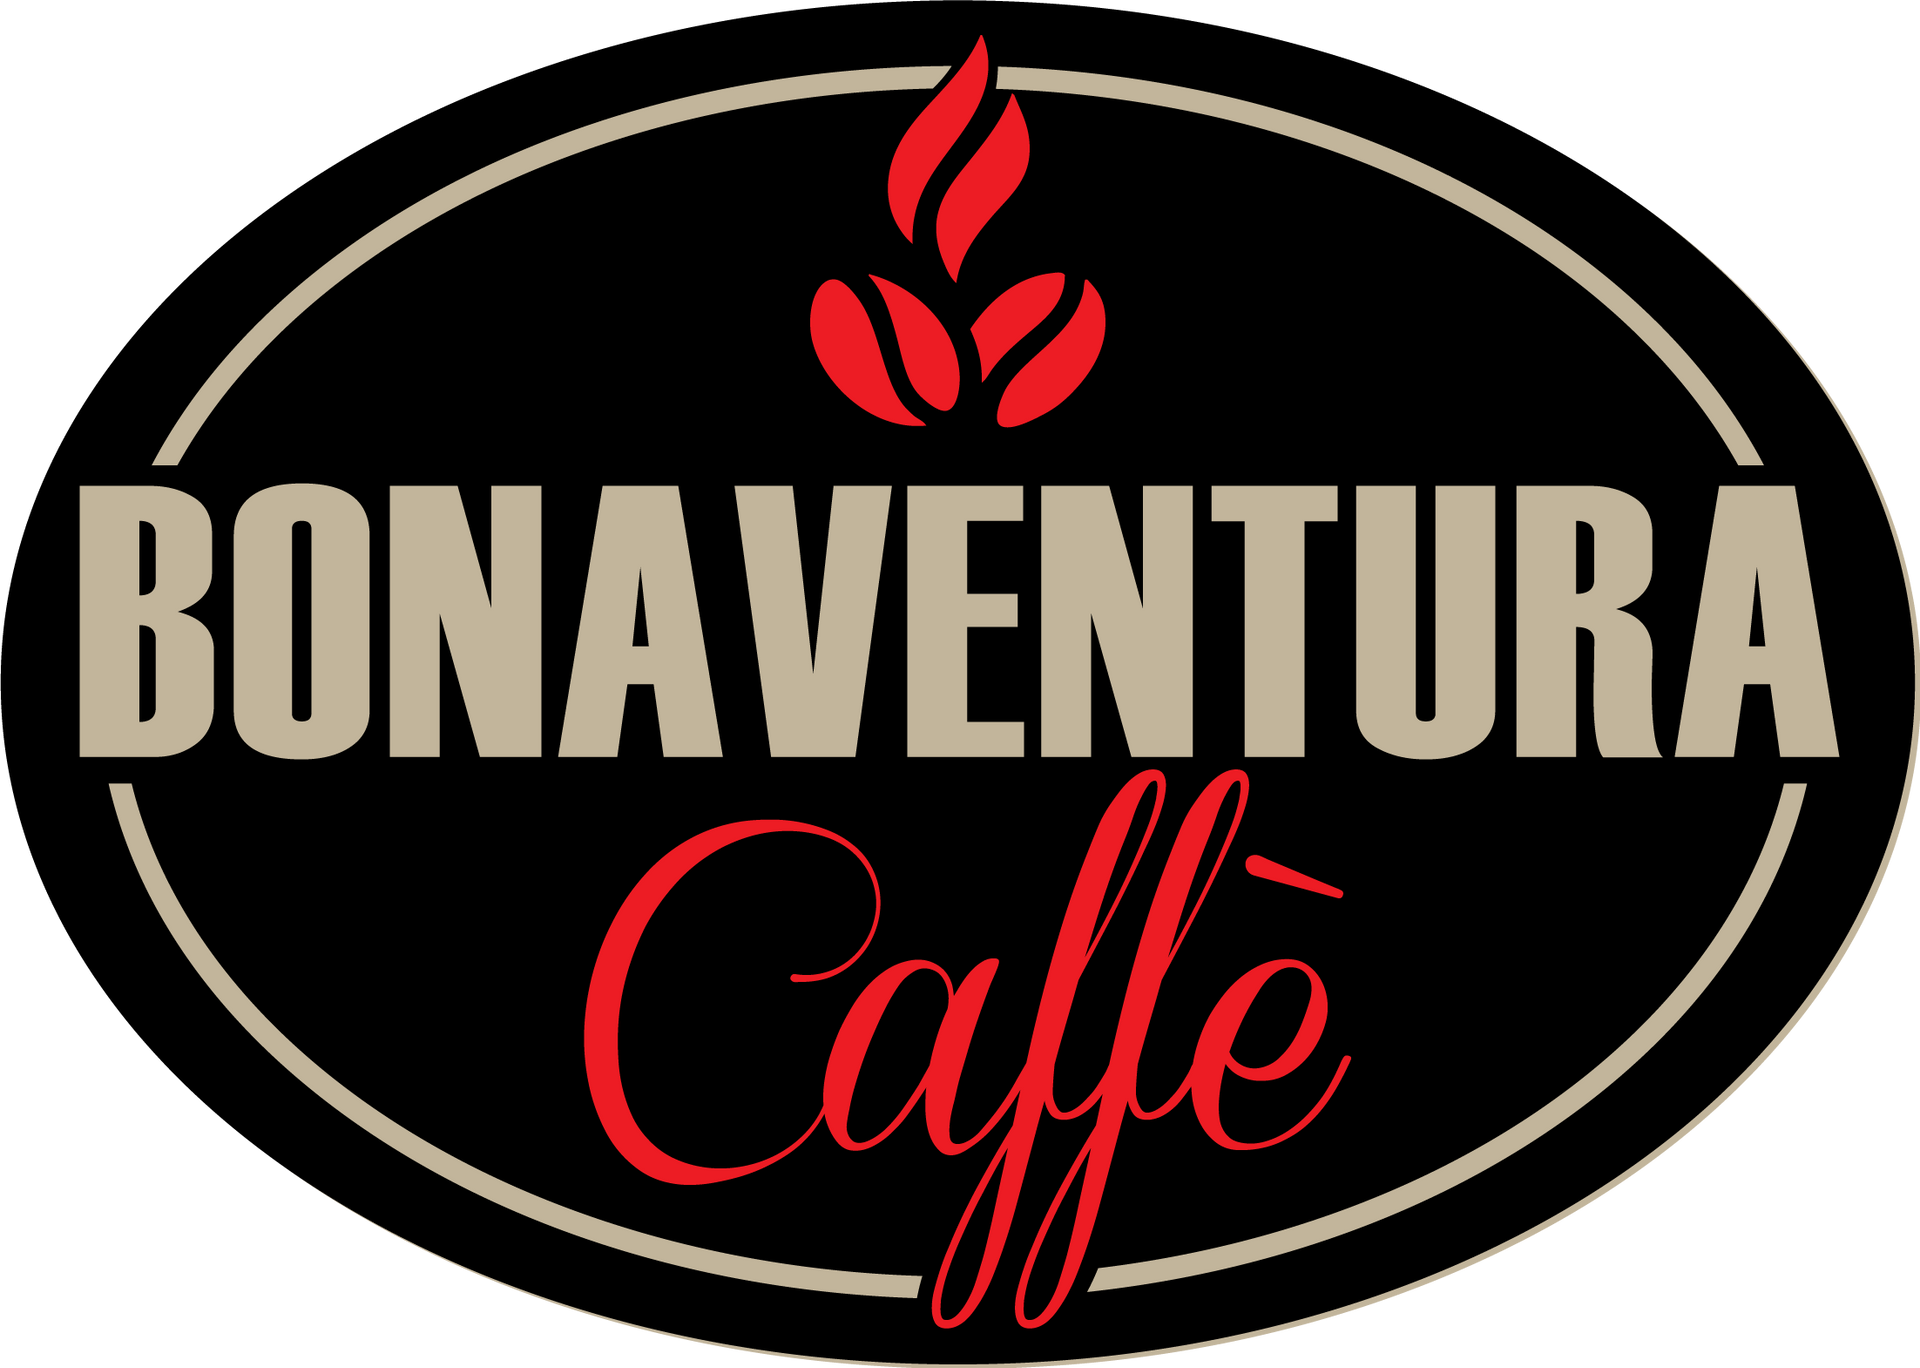 Bonaventura caffe - logo 